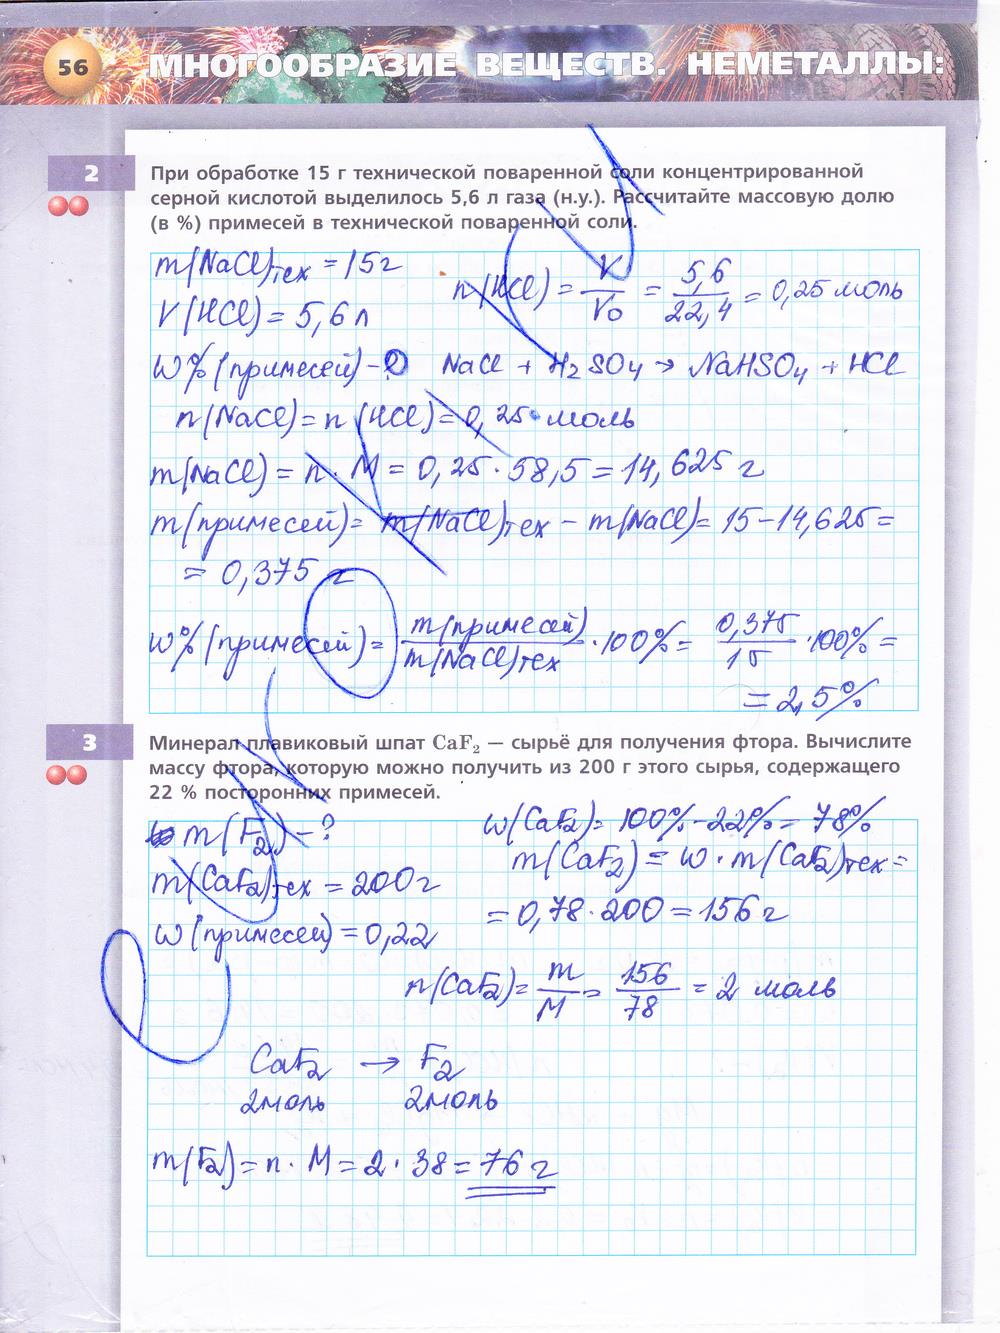 гдз 9 класс тетрадь-тренажёр страница 56 химия Гара